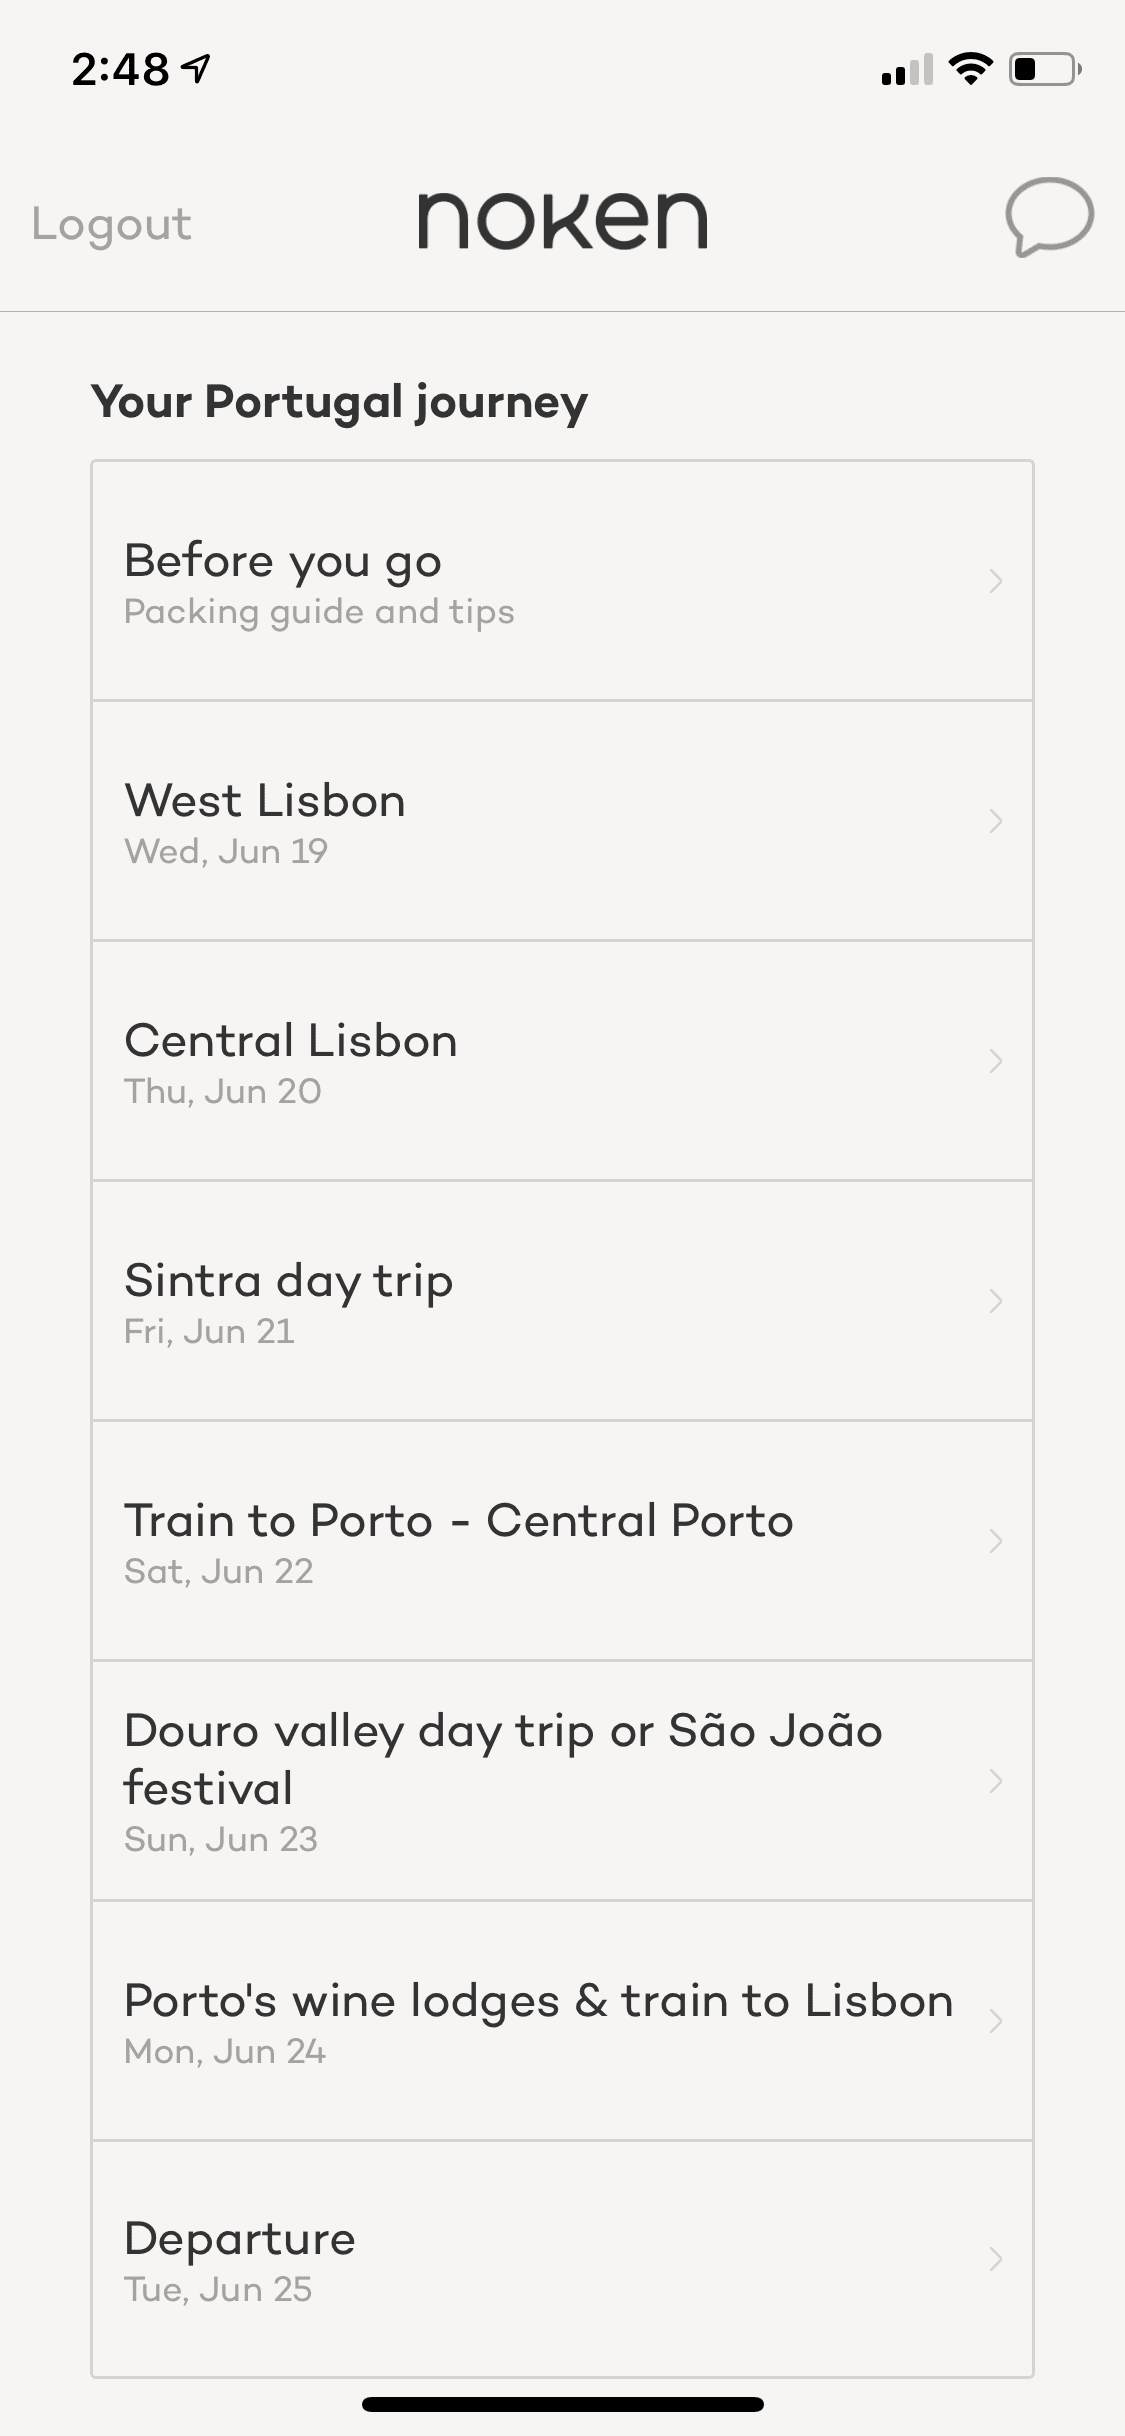 Noken Travel Service APP screenshot - Overall Portugal Itinerary